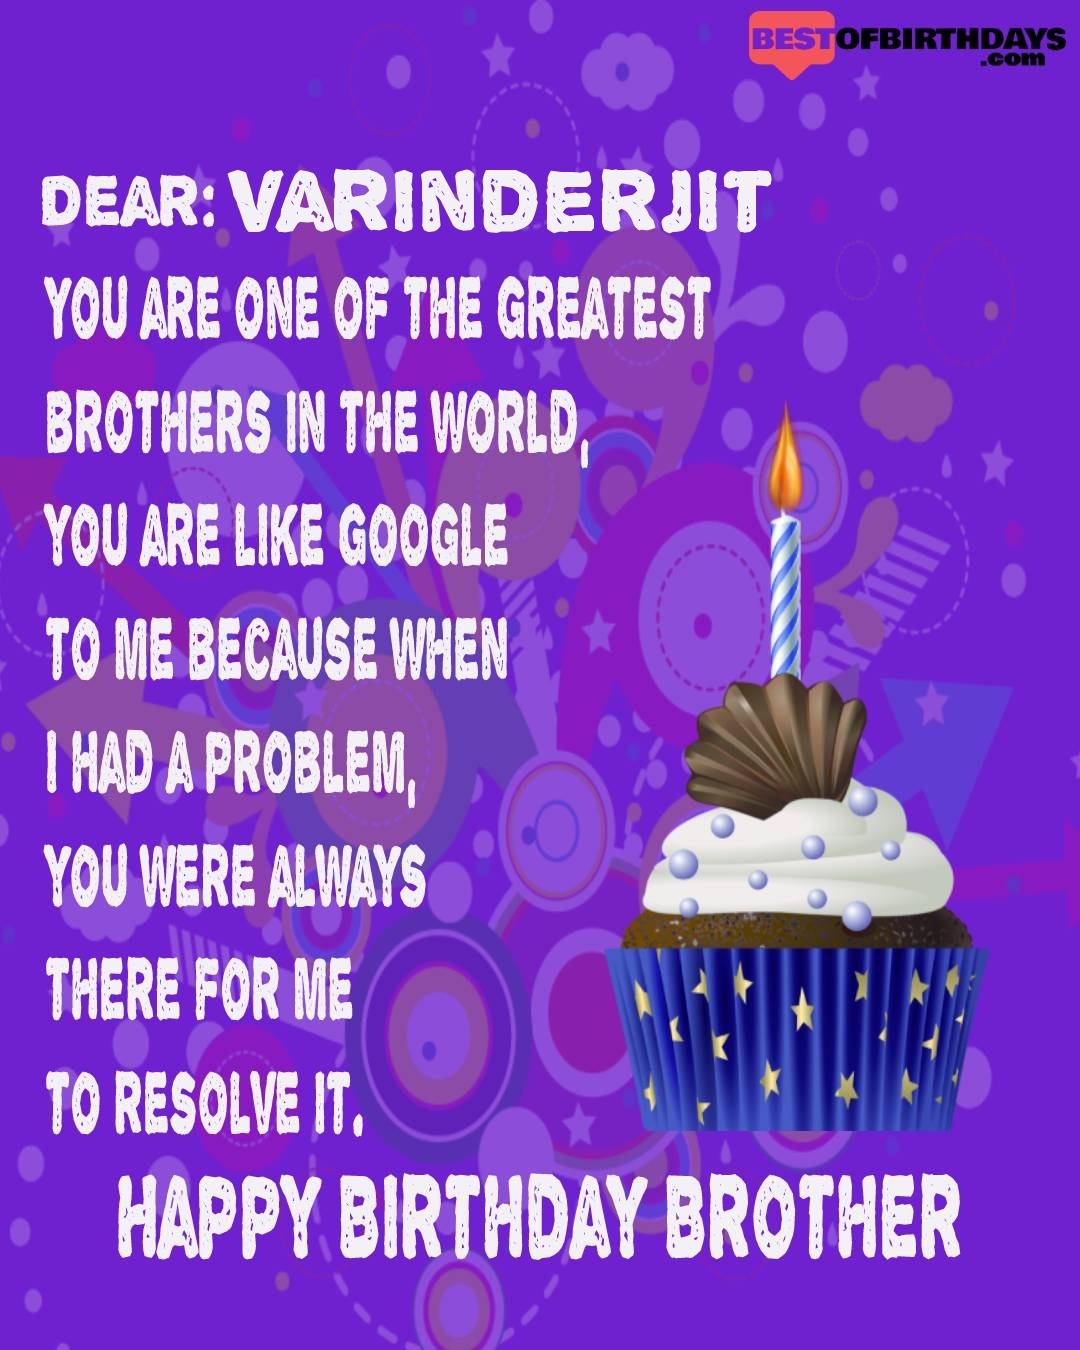 Happy birthday varinderjit bhai brother bro